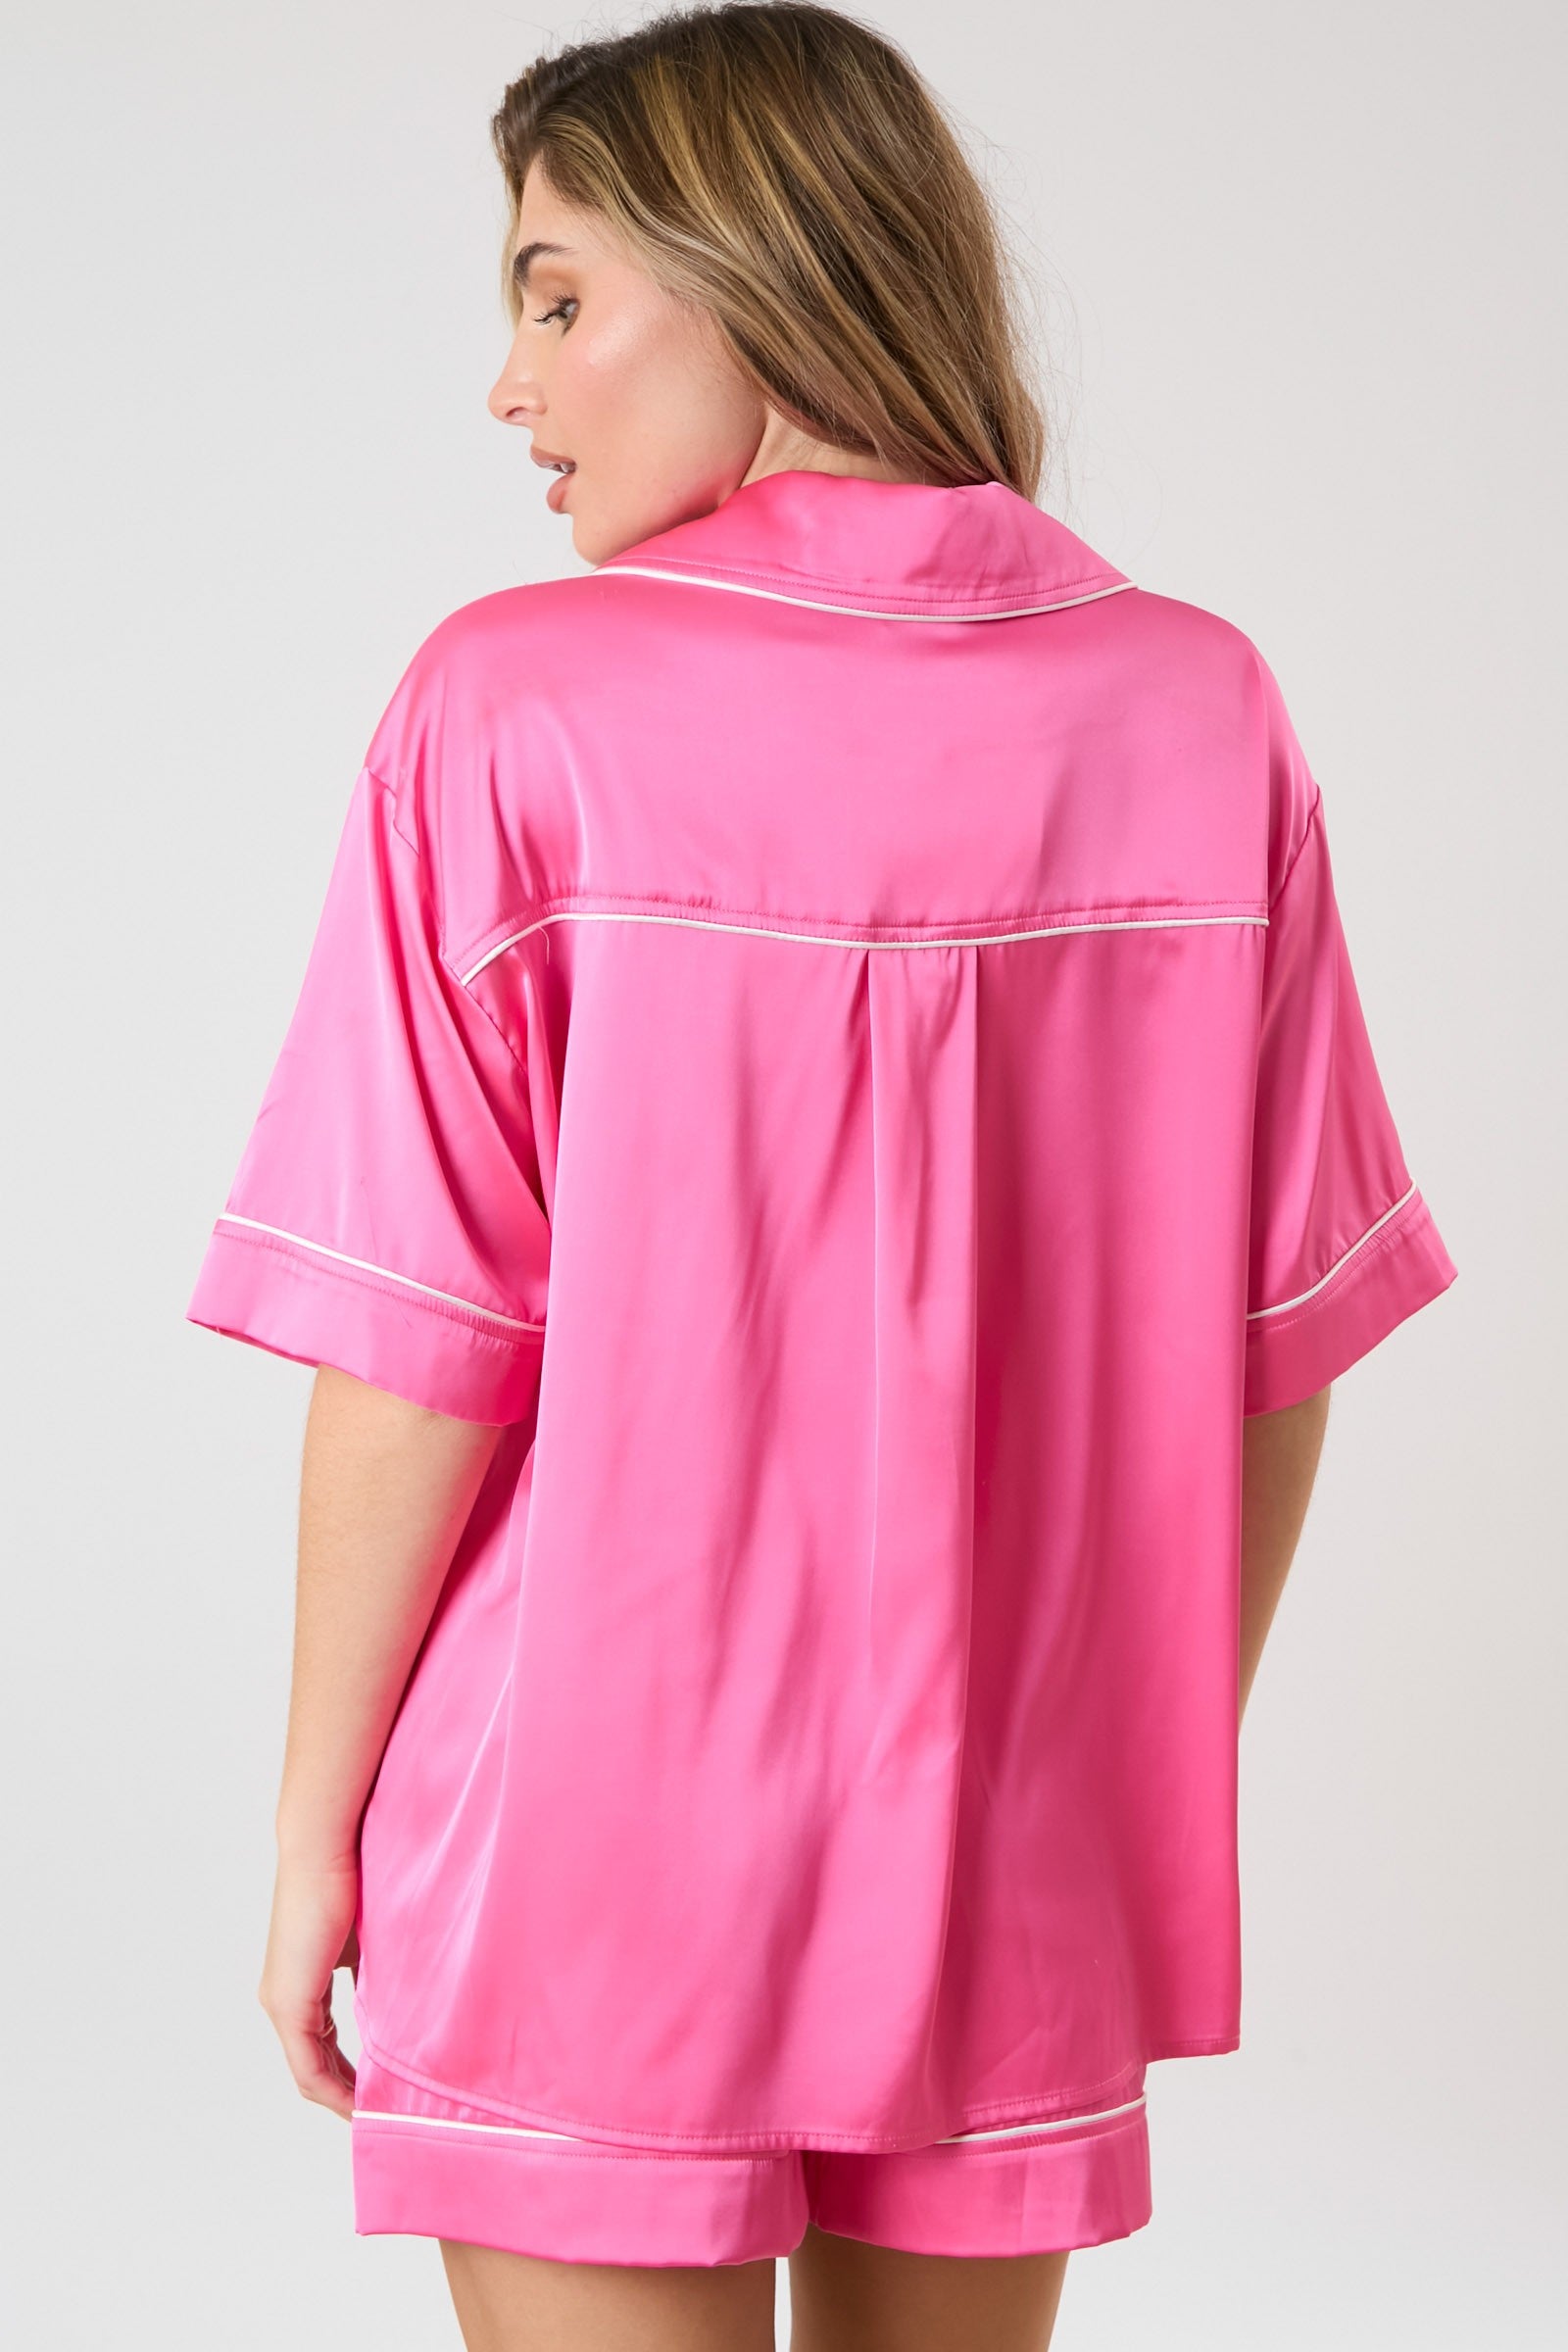 On Cloud Nine Pajama Top - Hot Pink